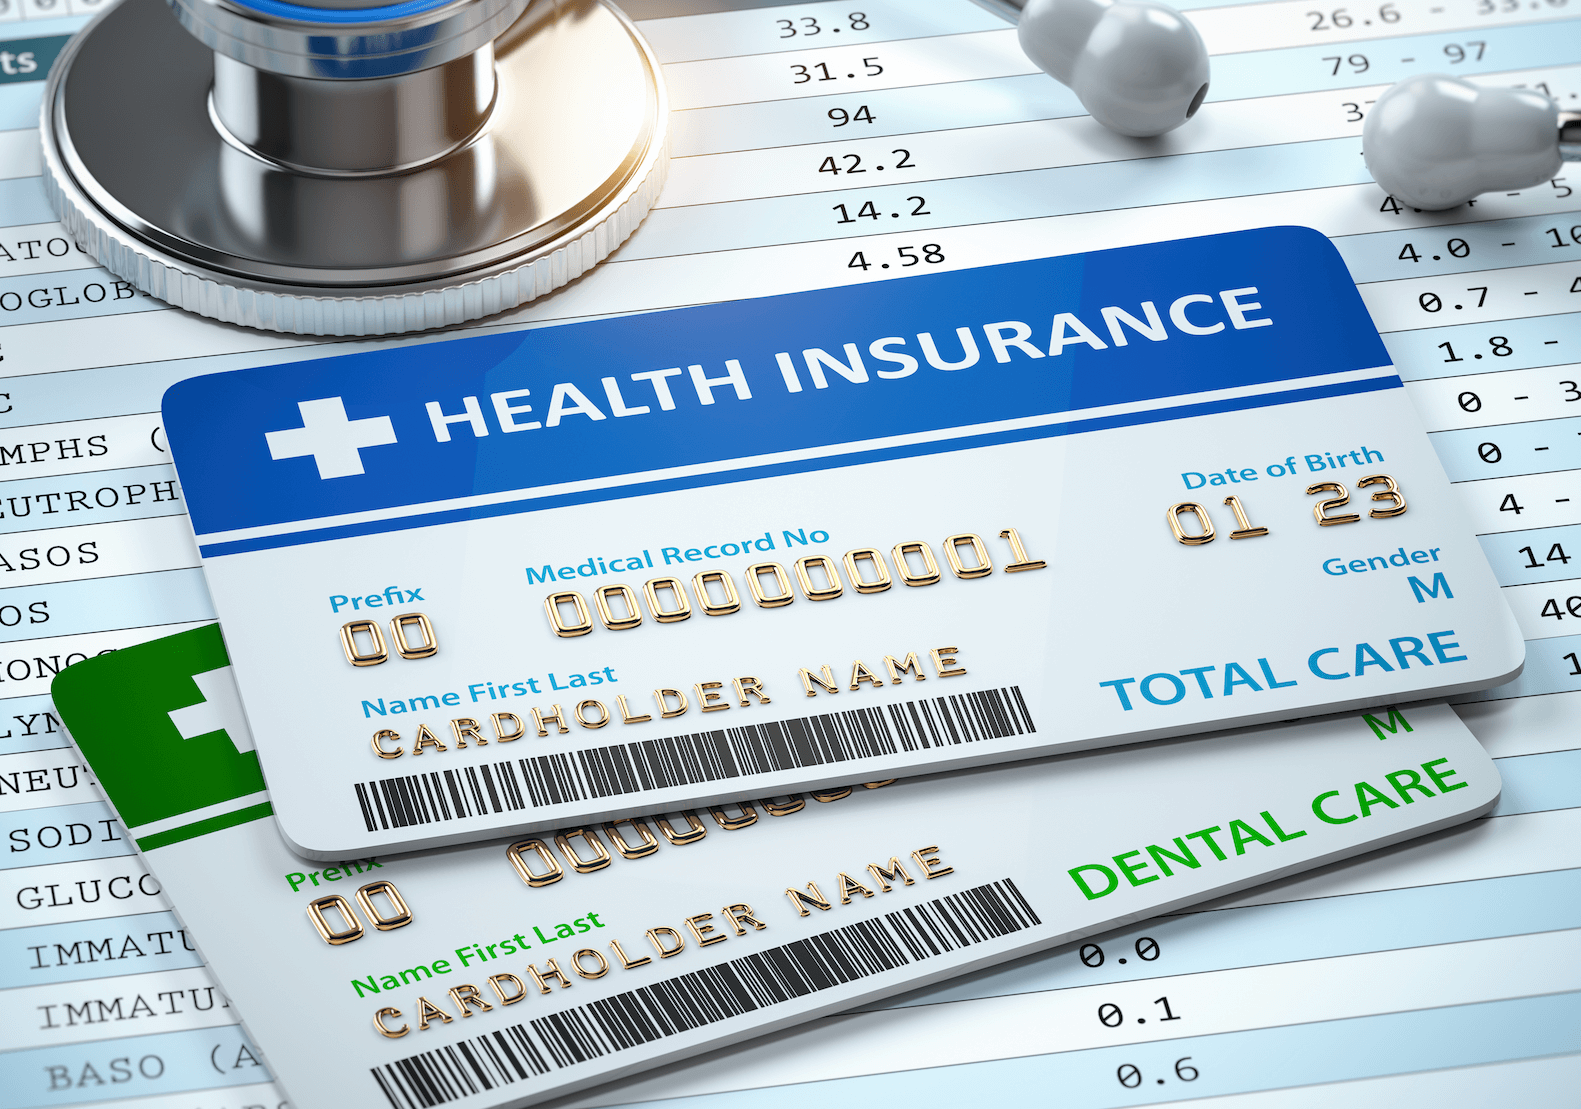 Health Insurance card